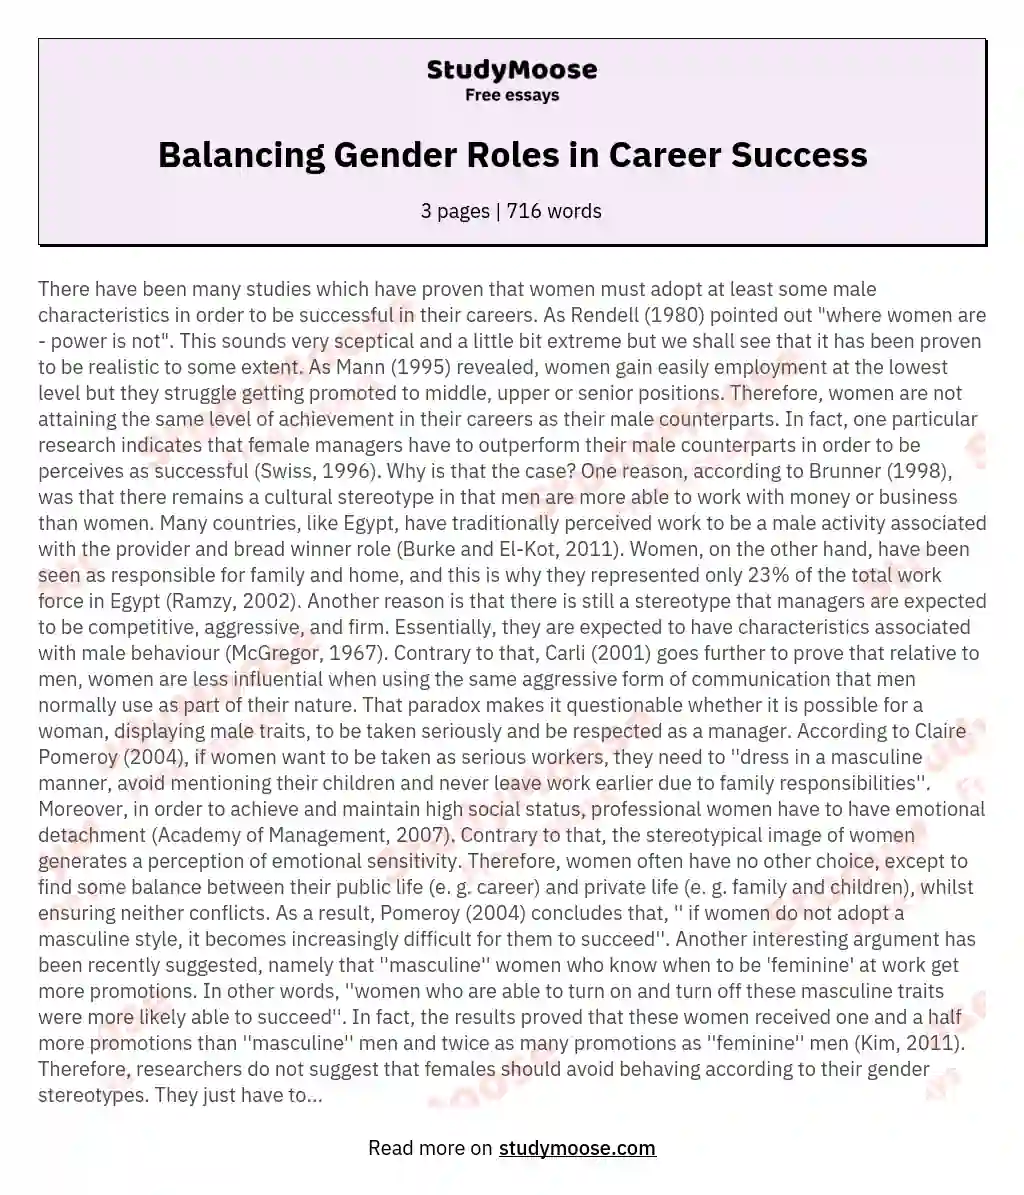 Balancing Gender Roles in Career Success essay